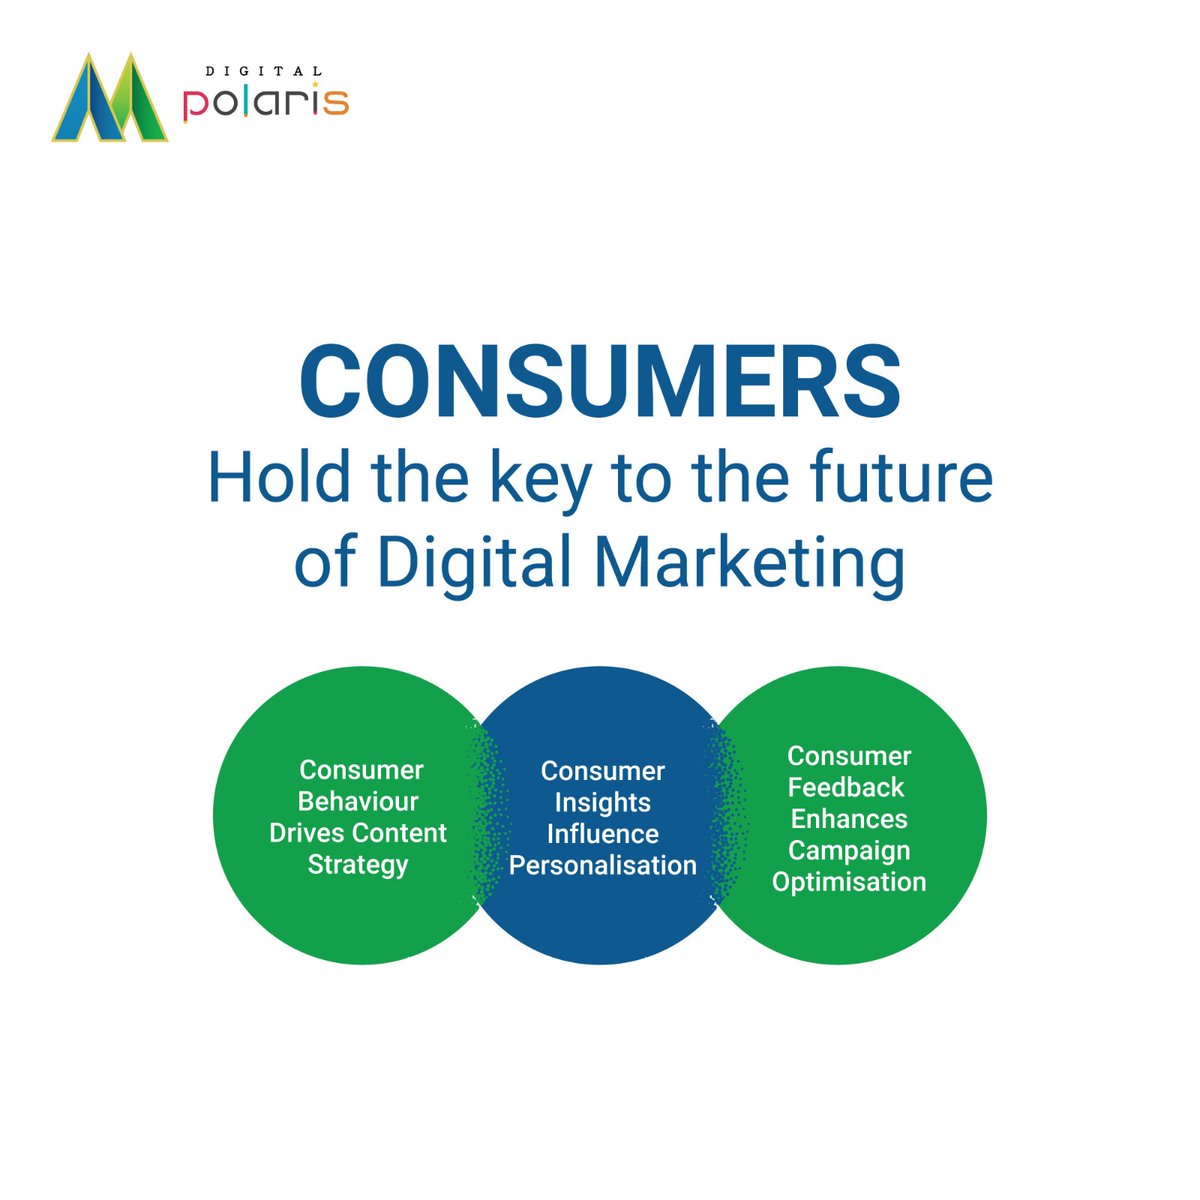 #DigitalPolaris is laser-focused on giving the #clients the #best #digitalmarketingservice. Get the best consumer-centric #digital #marketingservices from #Digital_Polaris.